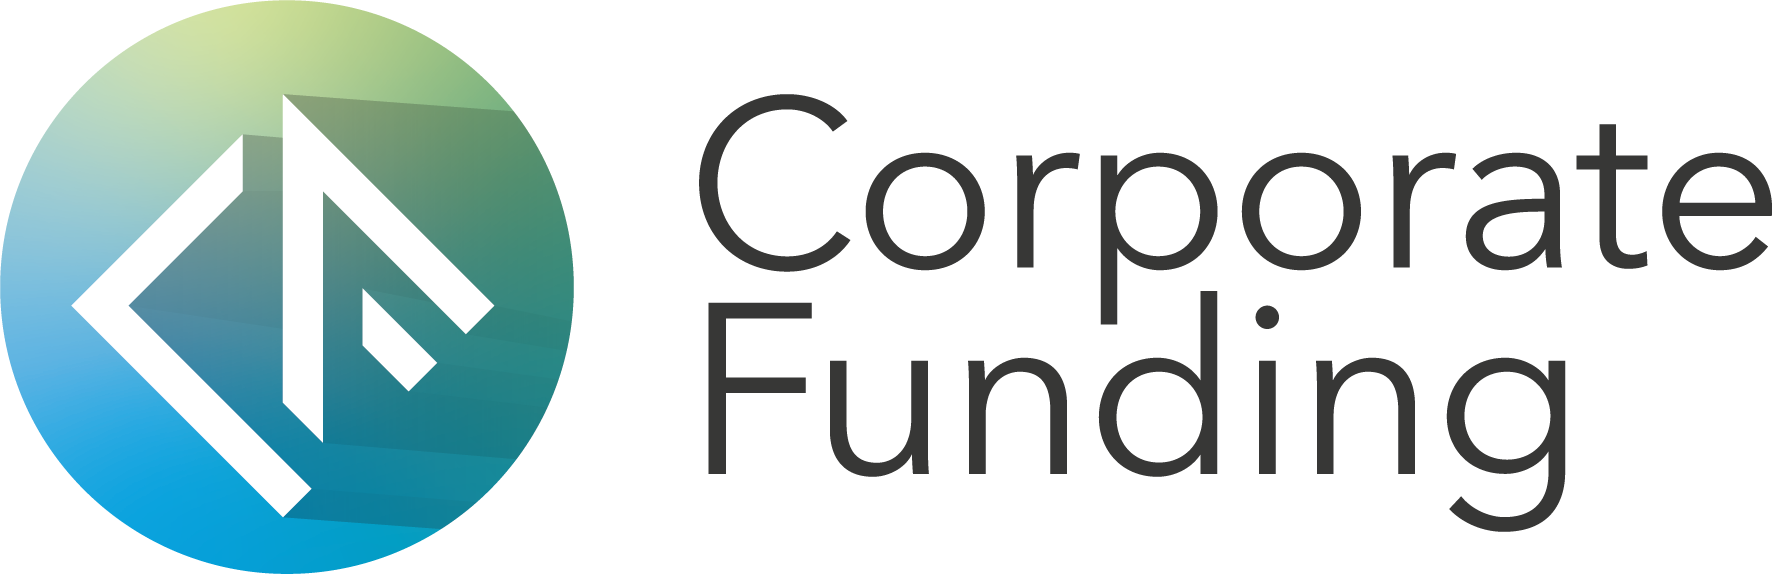 Corporate Funding Logo